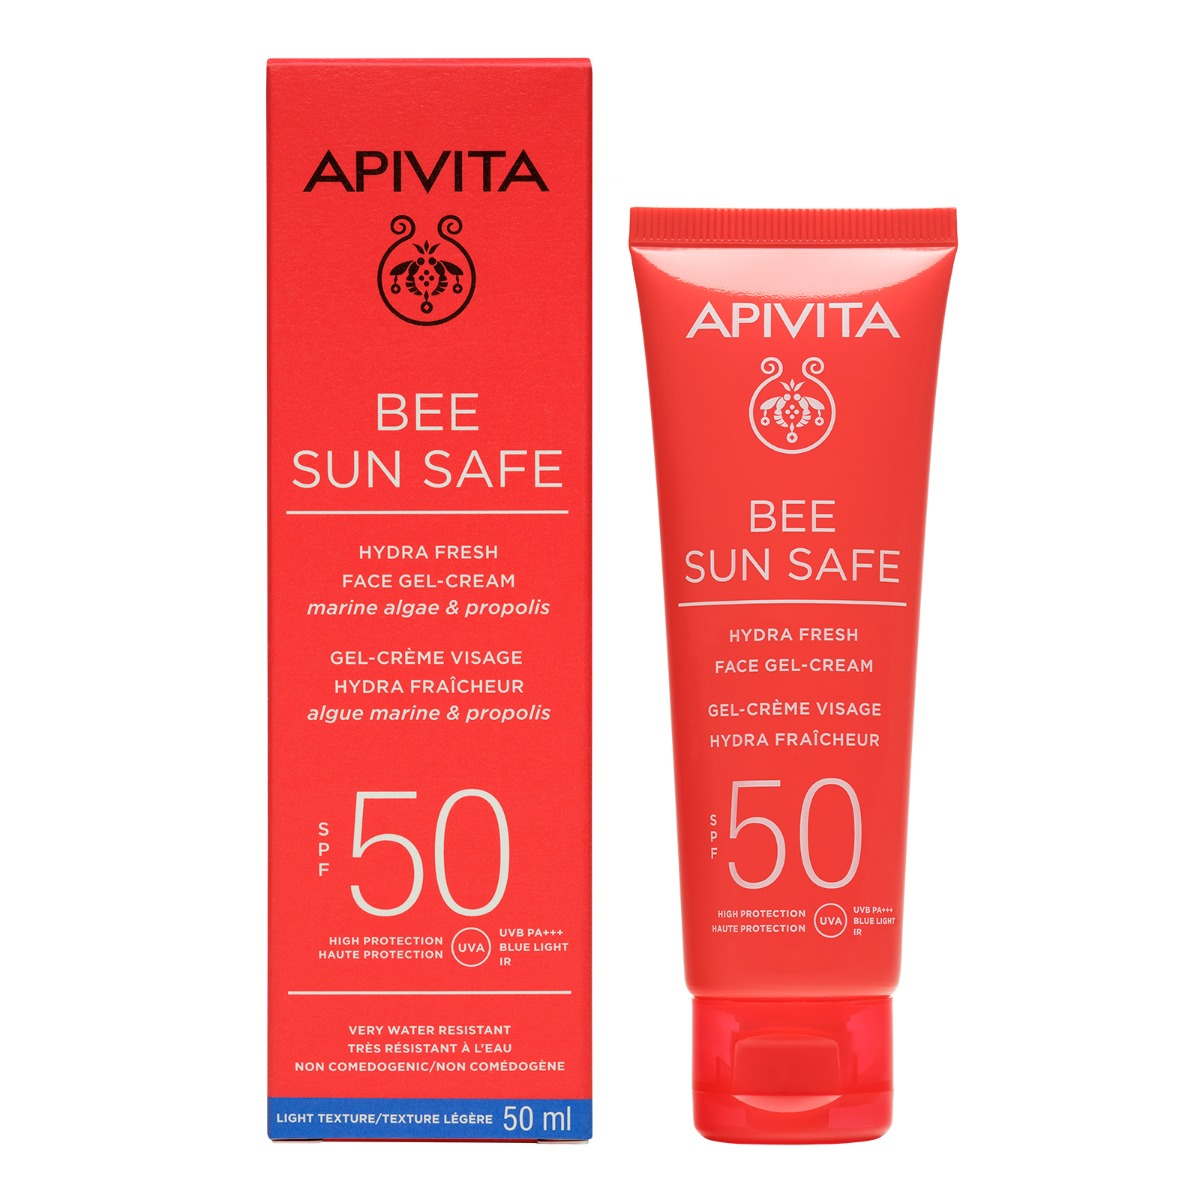 APIVITA Bee Sun Safe Hydra Fresh Gel Cream SPF 50, 50ml